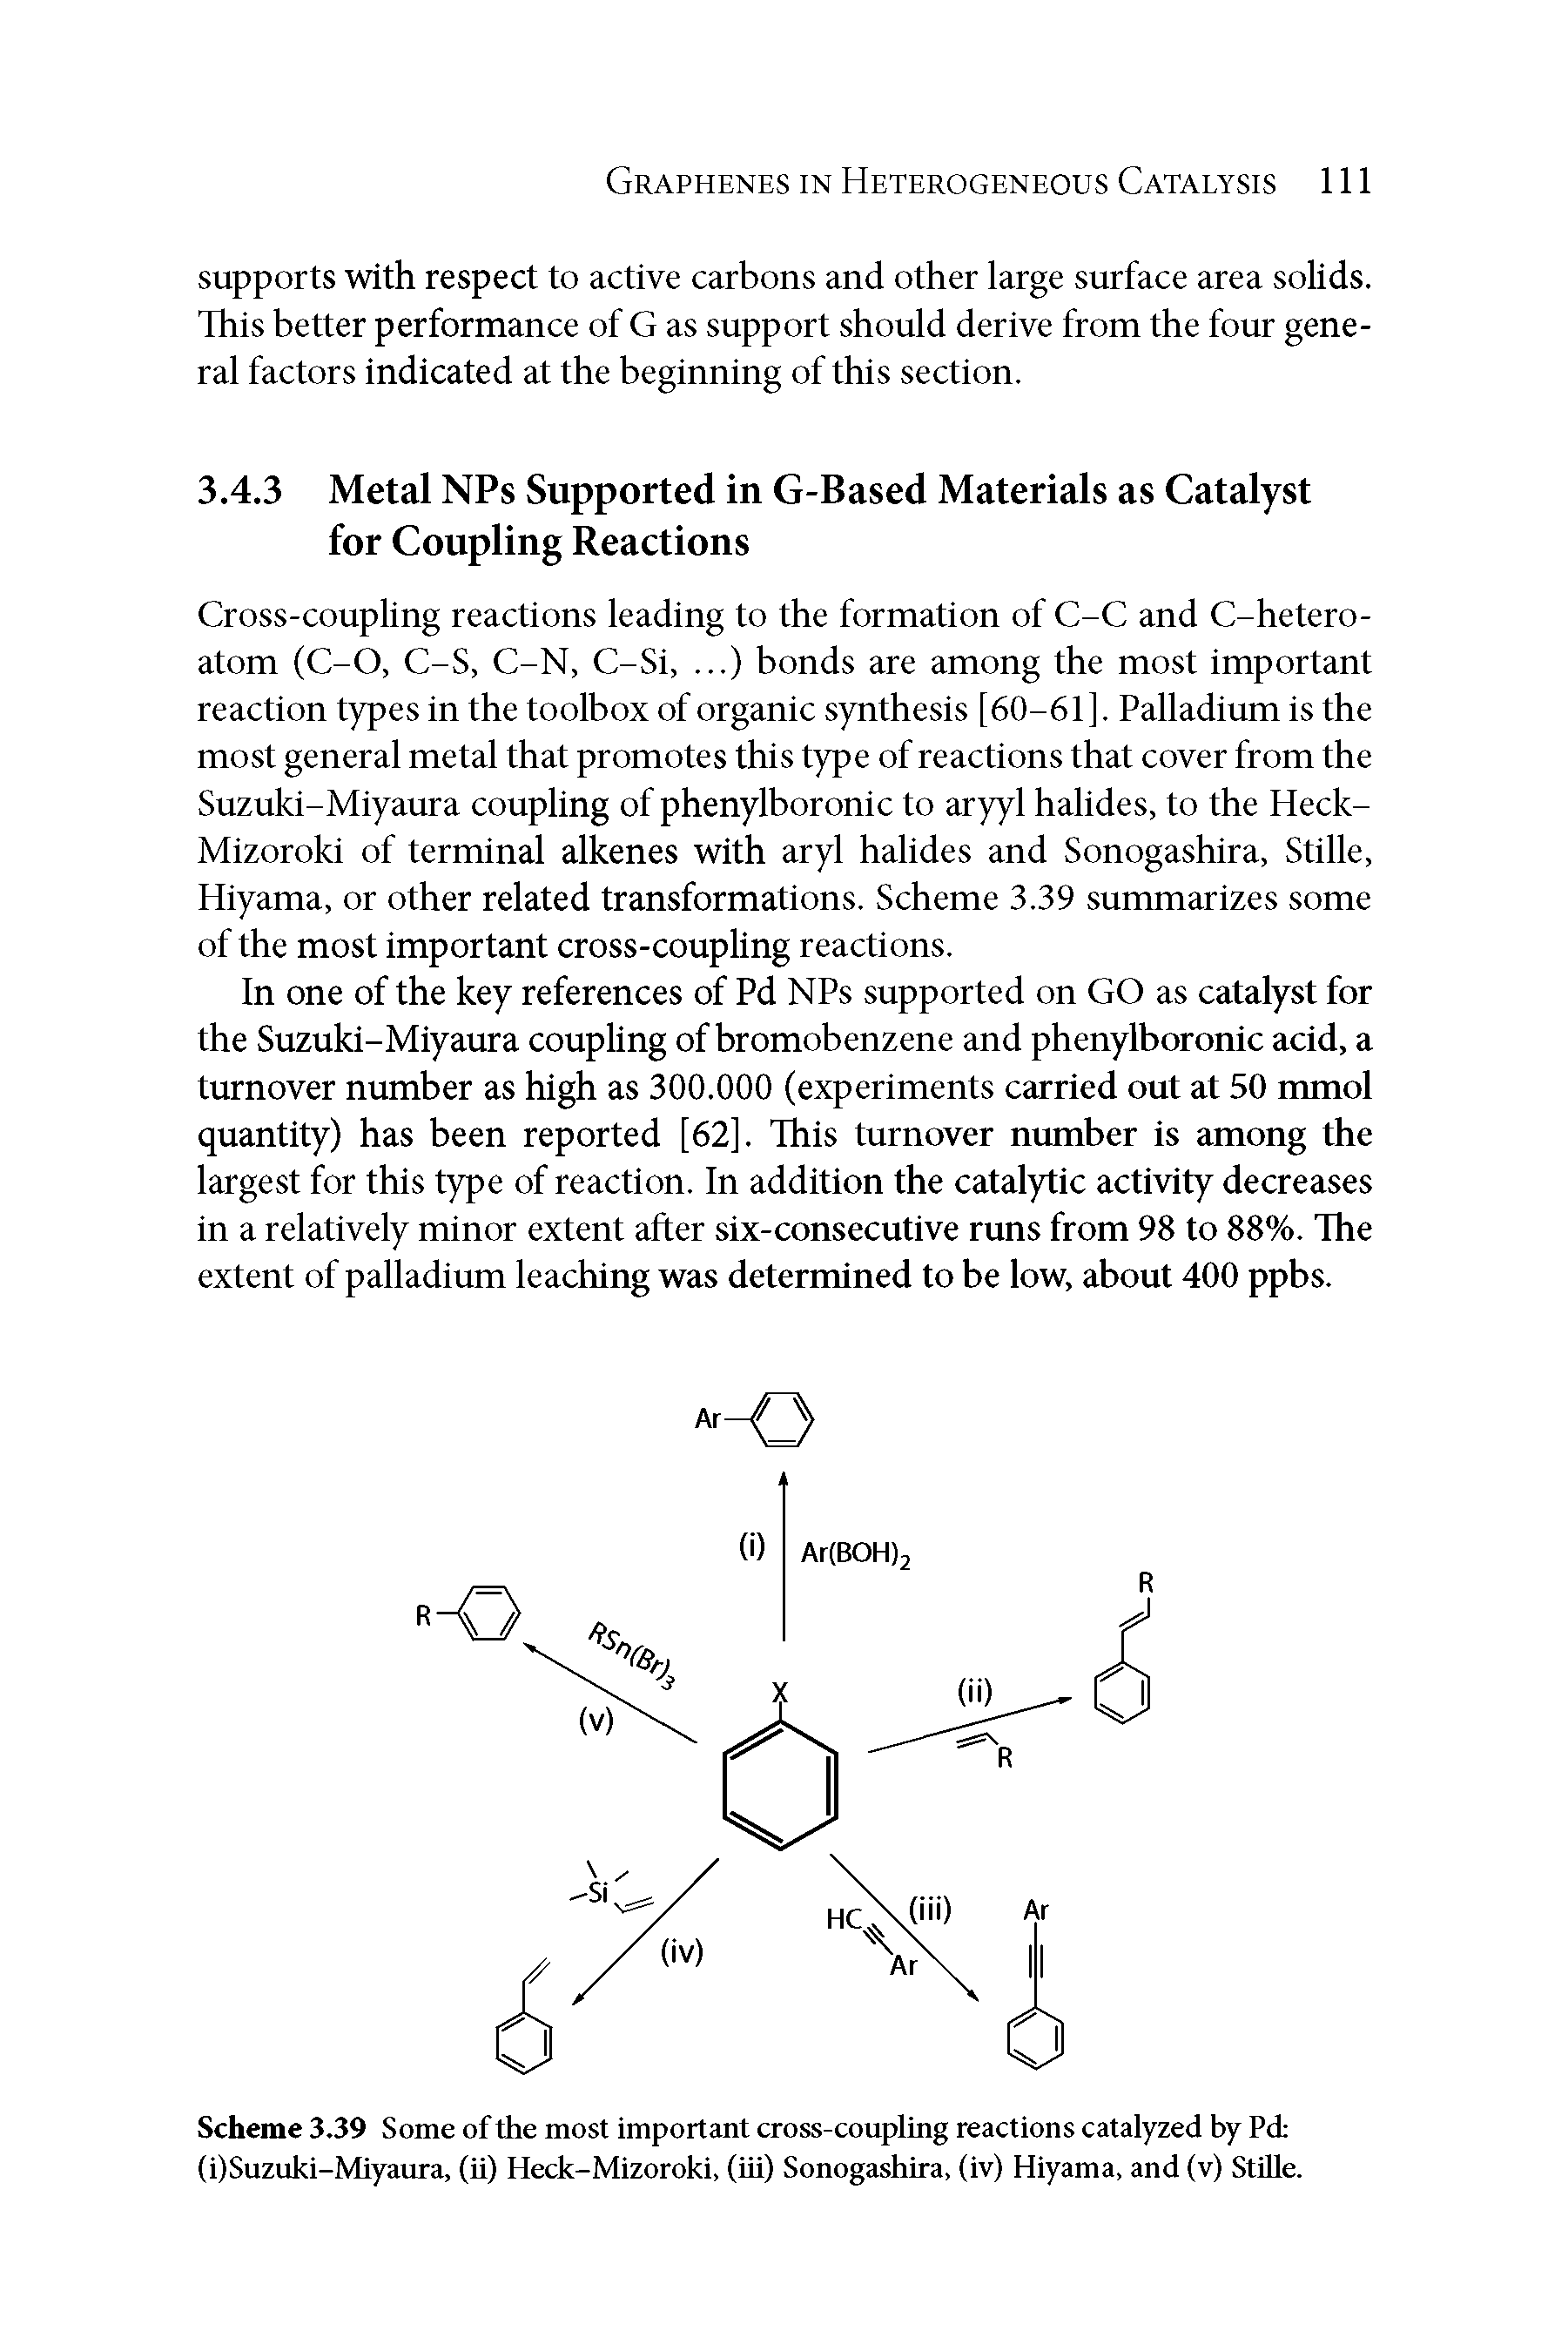 Scheme 3.39 Some of the most important cross-coupling reactions catalyzed by Pd (i)Suzuki-Miyaura, (ii) Heck-Mizoroki, (iii) Sonogashira, (iv) Hiyama, and (v) Stille.